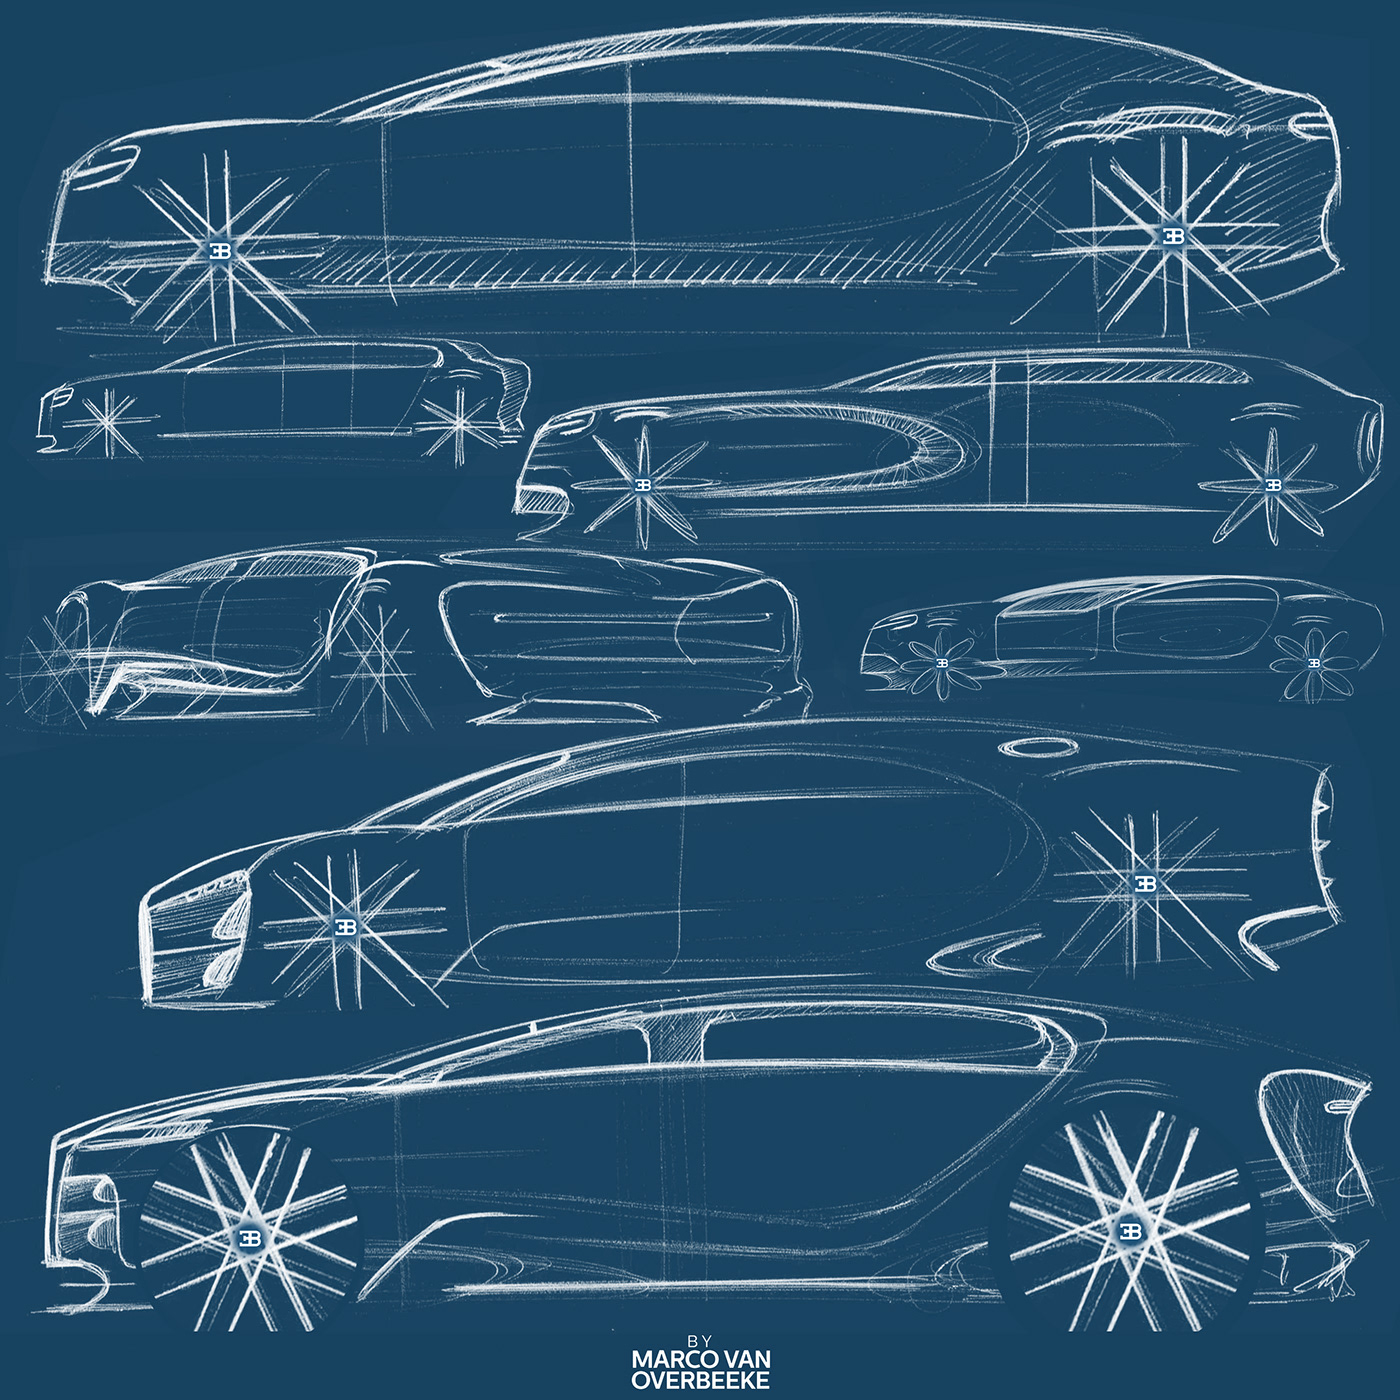 bugatti royale atlantic concept design automotive   Truck transporter Chiron veyron